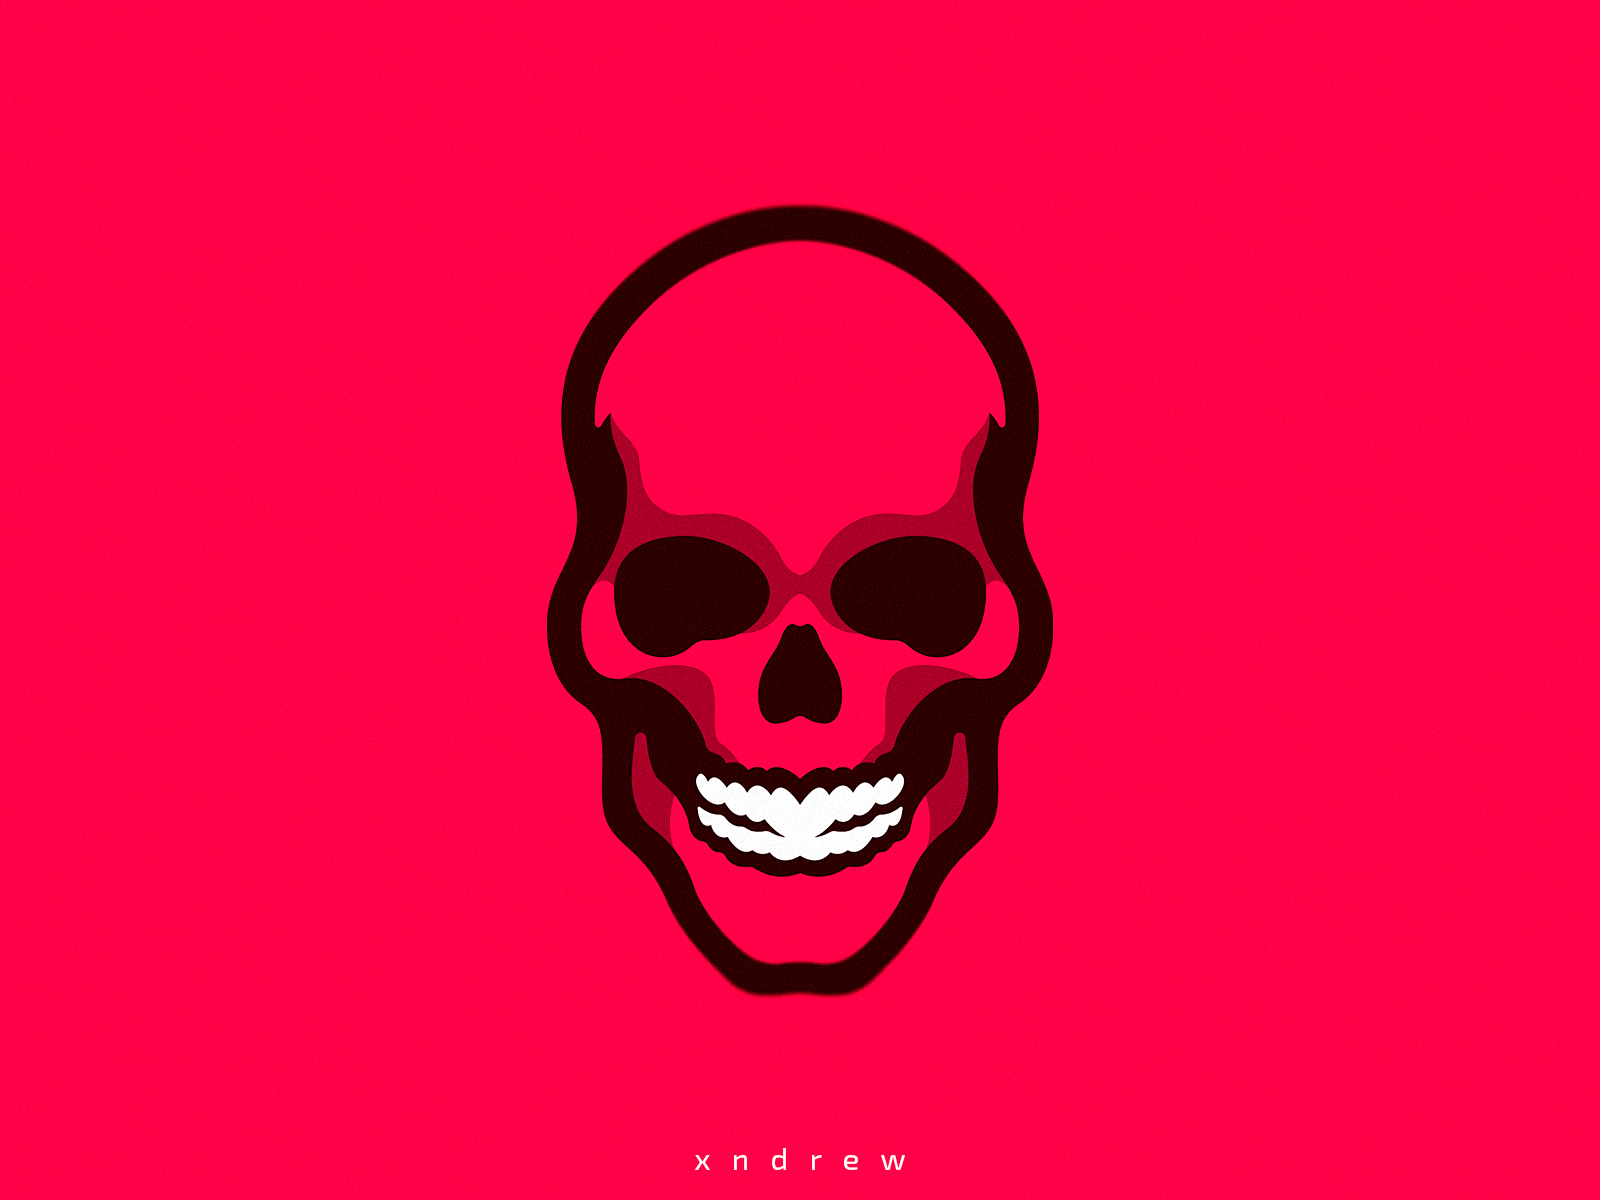 Red Skull by Xndrew on Dribbble